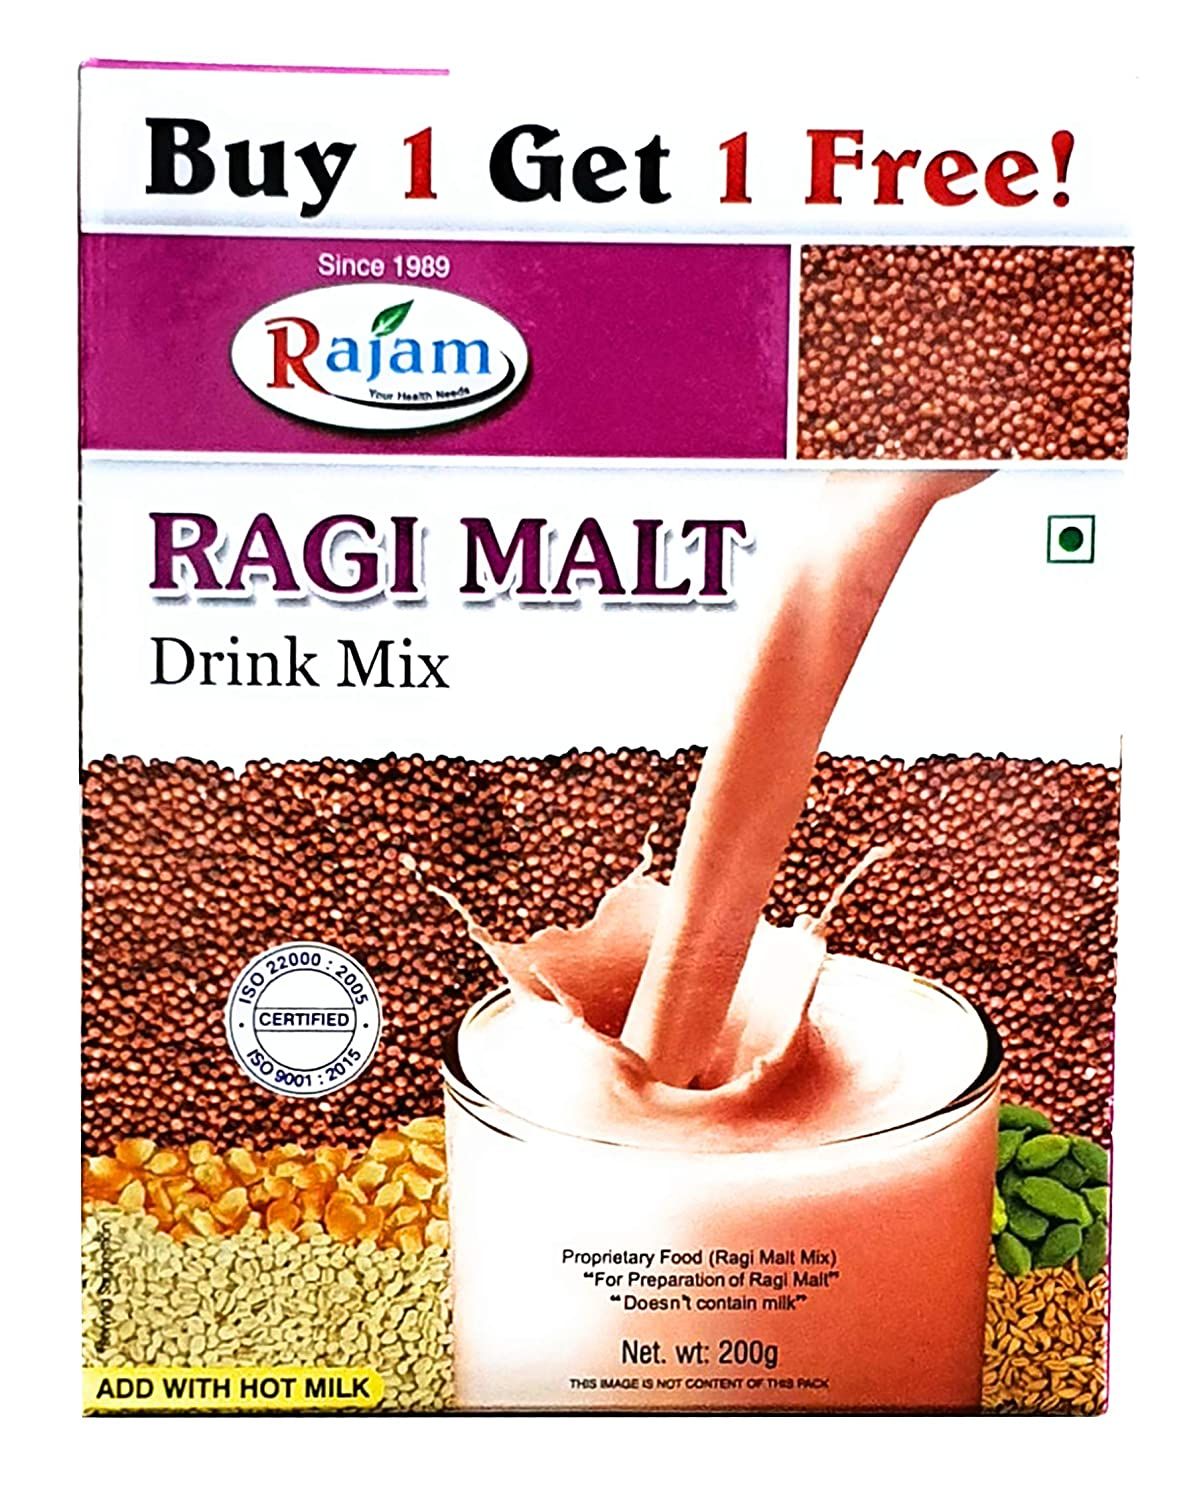 Rajam Ragi Malt Drink Mix Image